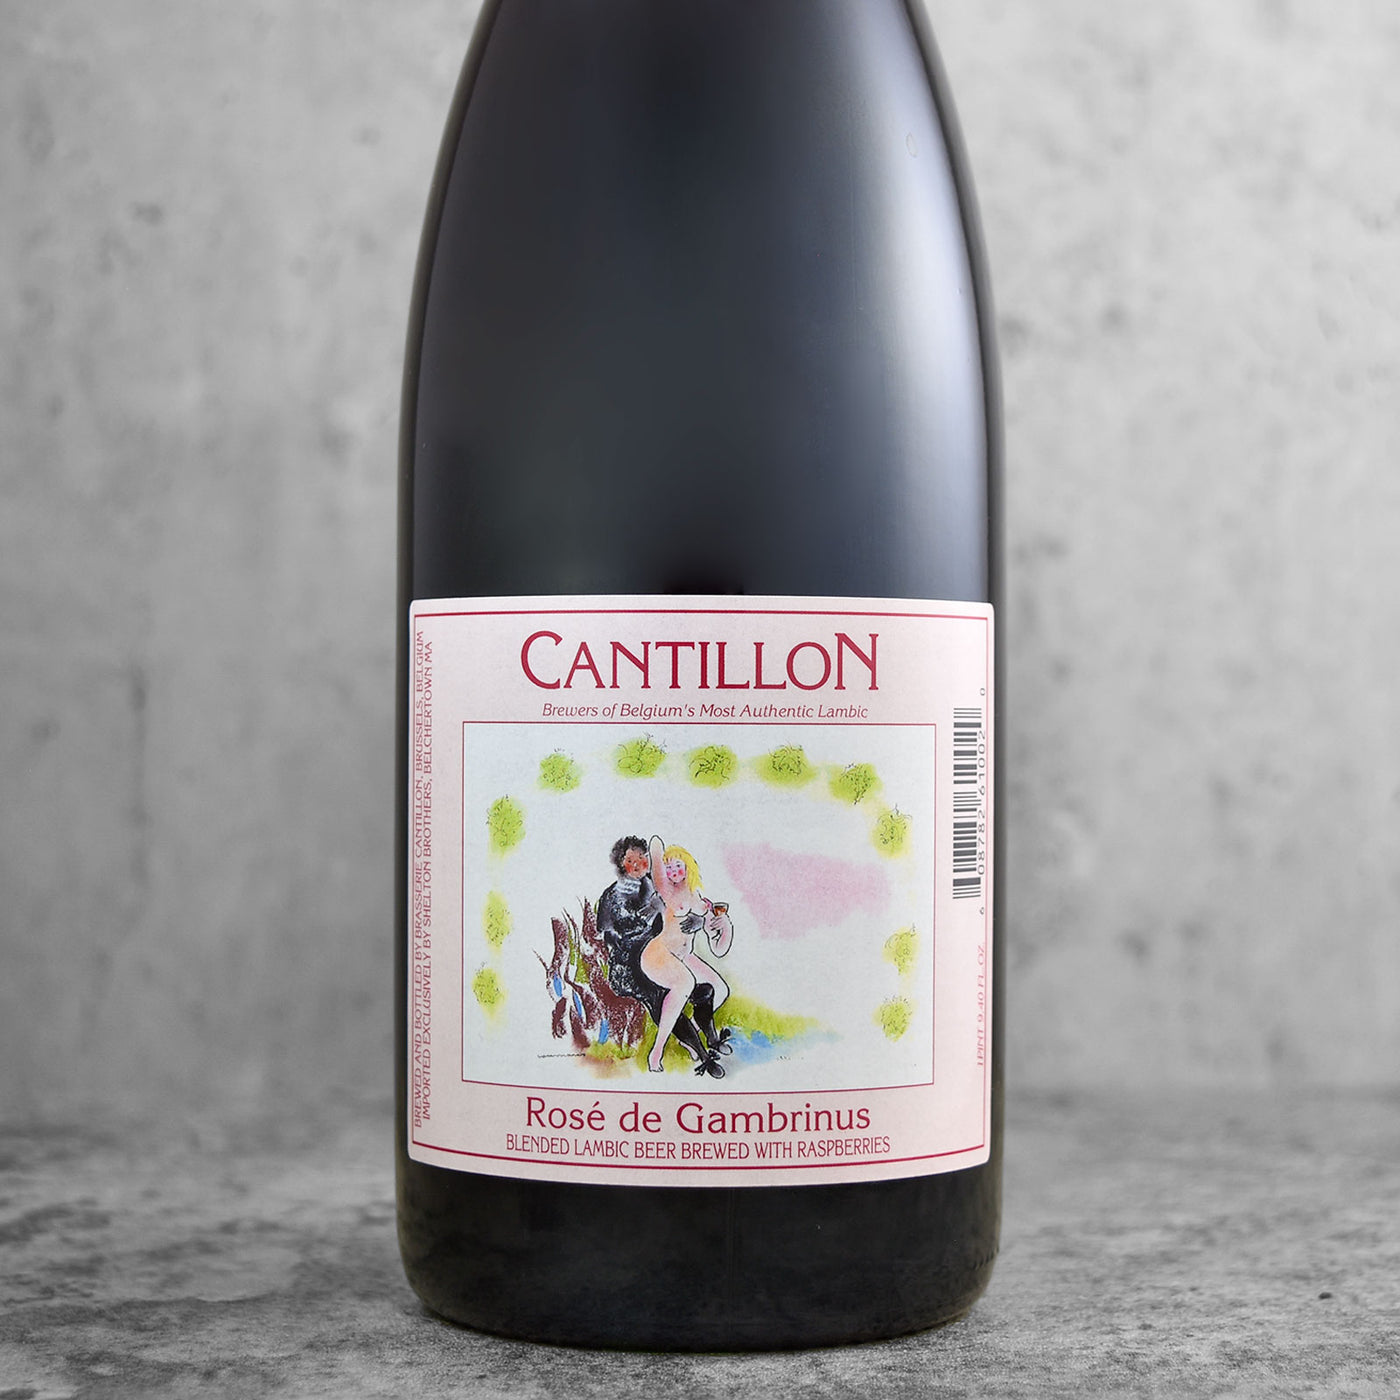 Cantillon Rose de Gambrinus 2020 "Limit 1"